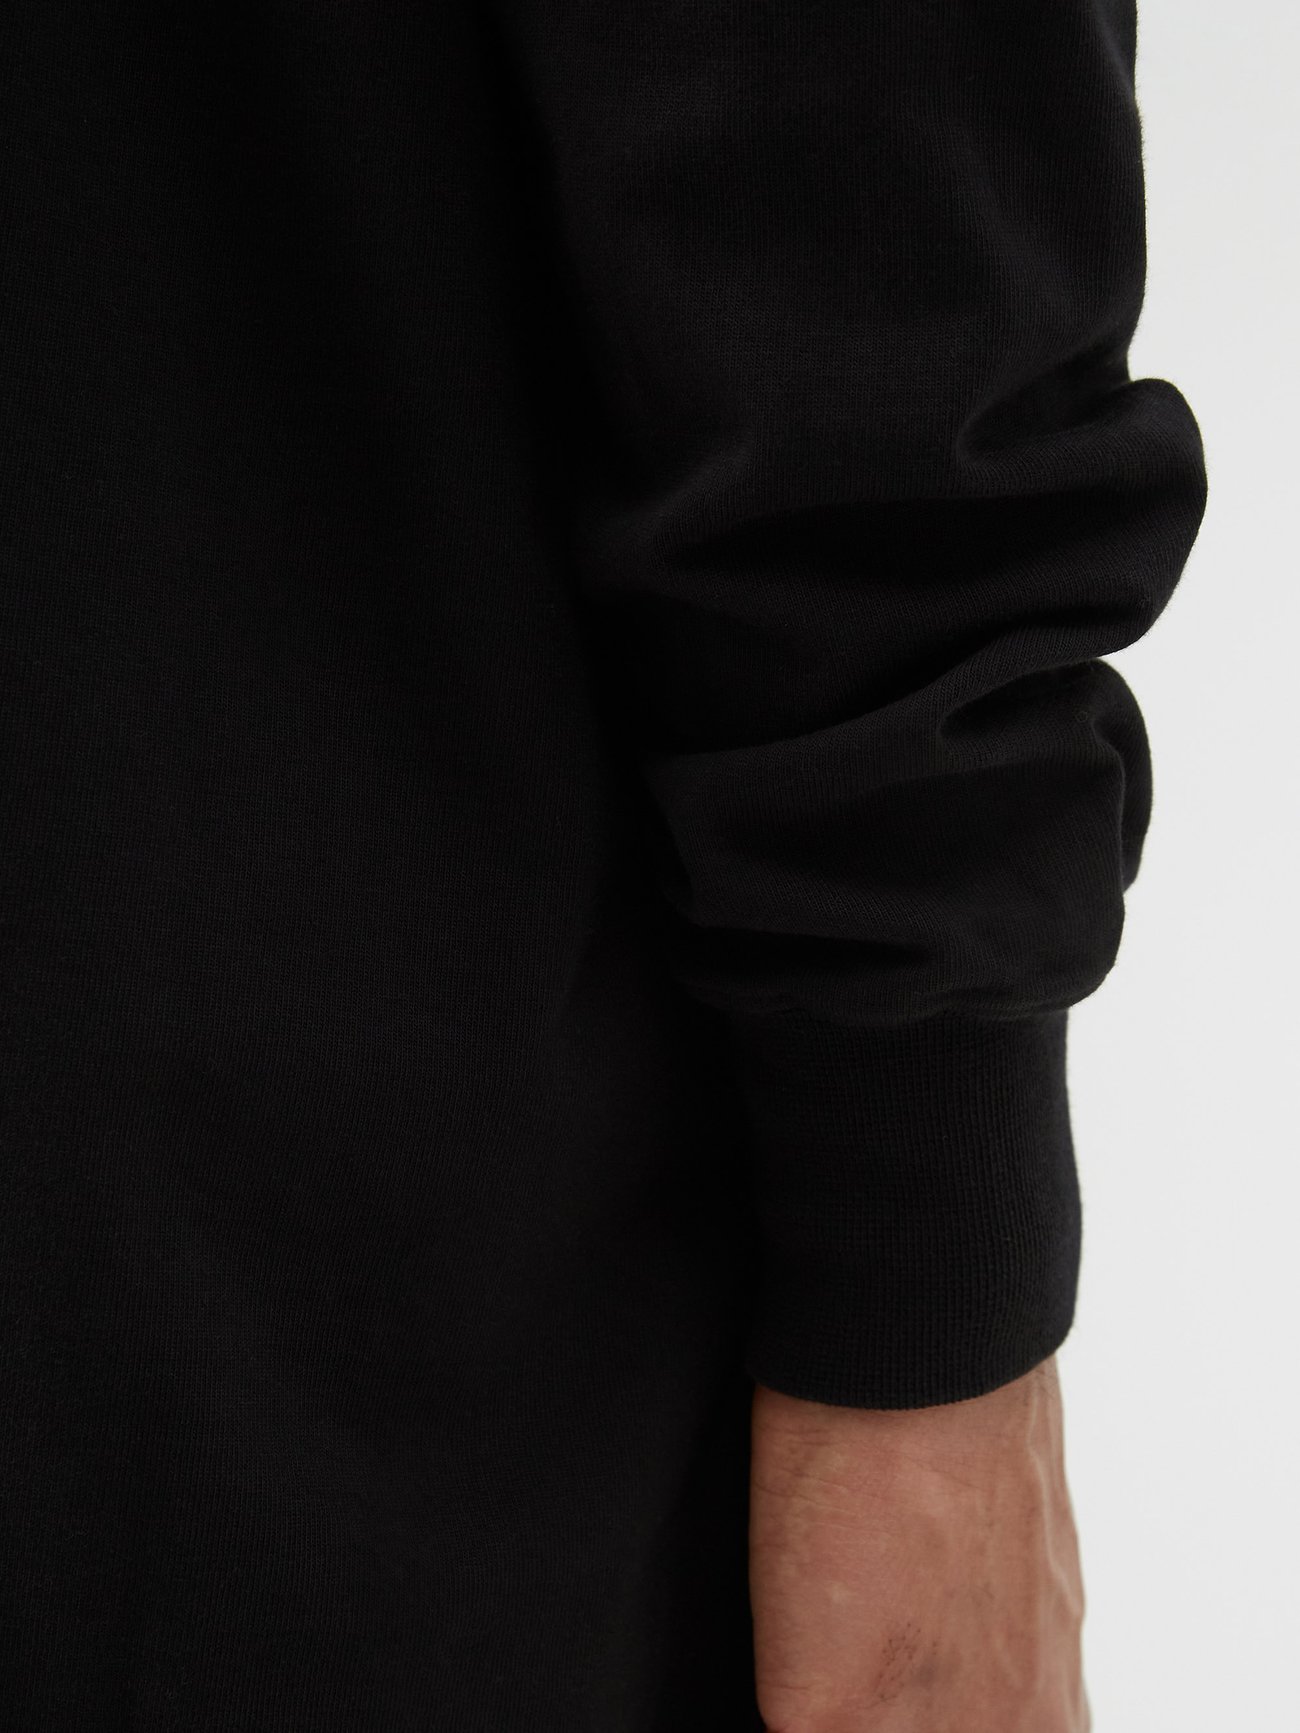 Black Eyelet cotton-jersey pullover hoodie, Rick Owens DRKSHDW